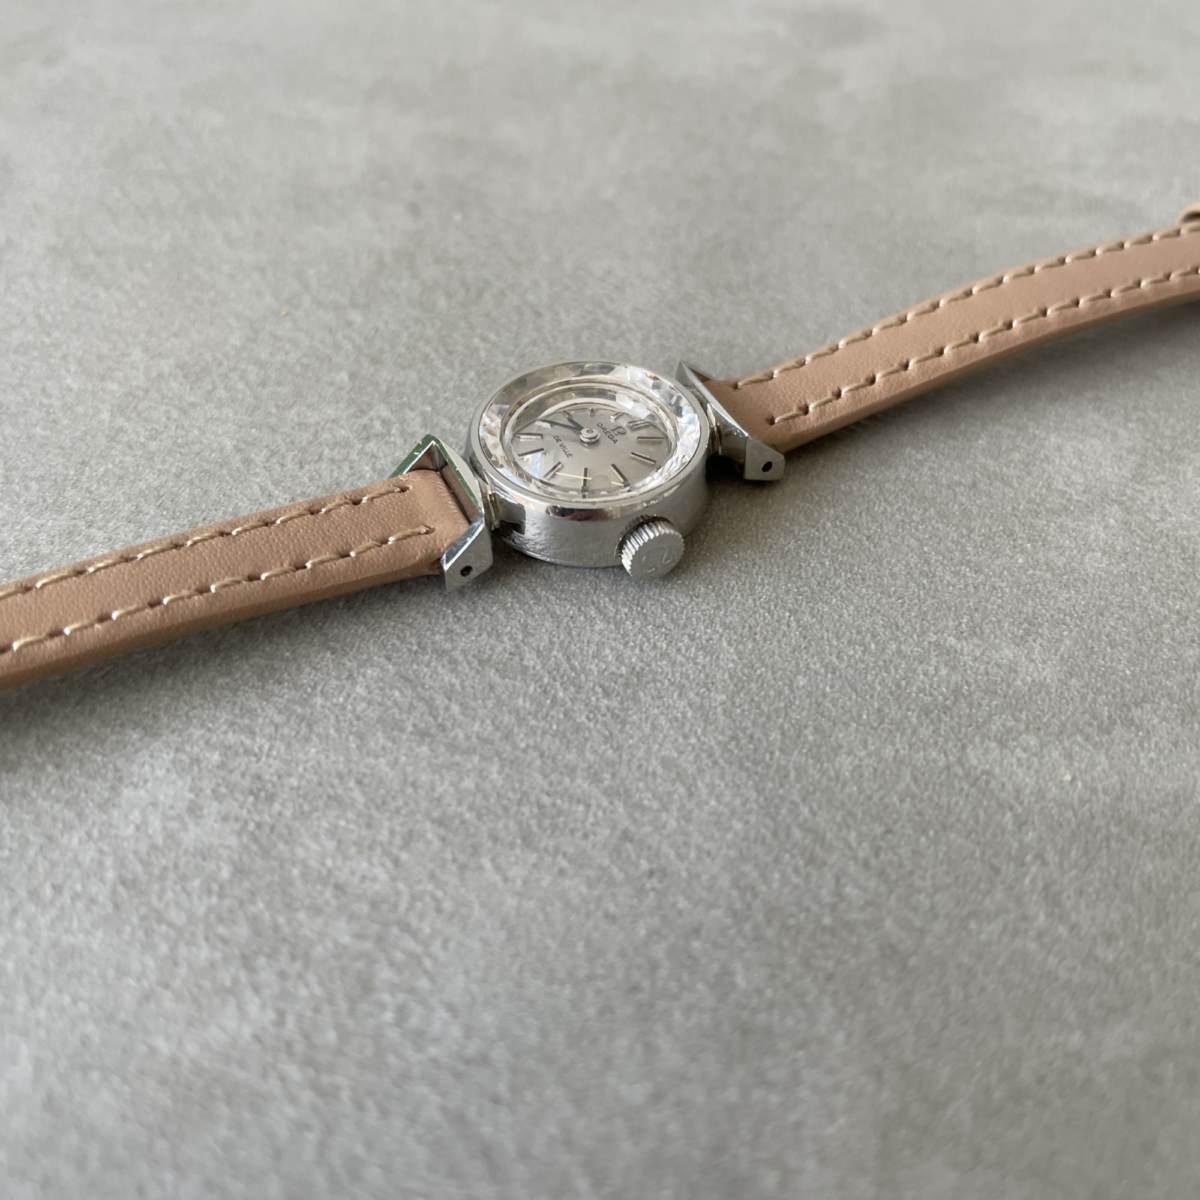 OthersOMEGA 1960s Vintage Watch